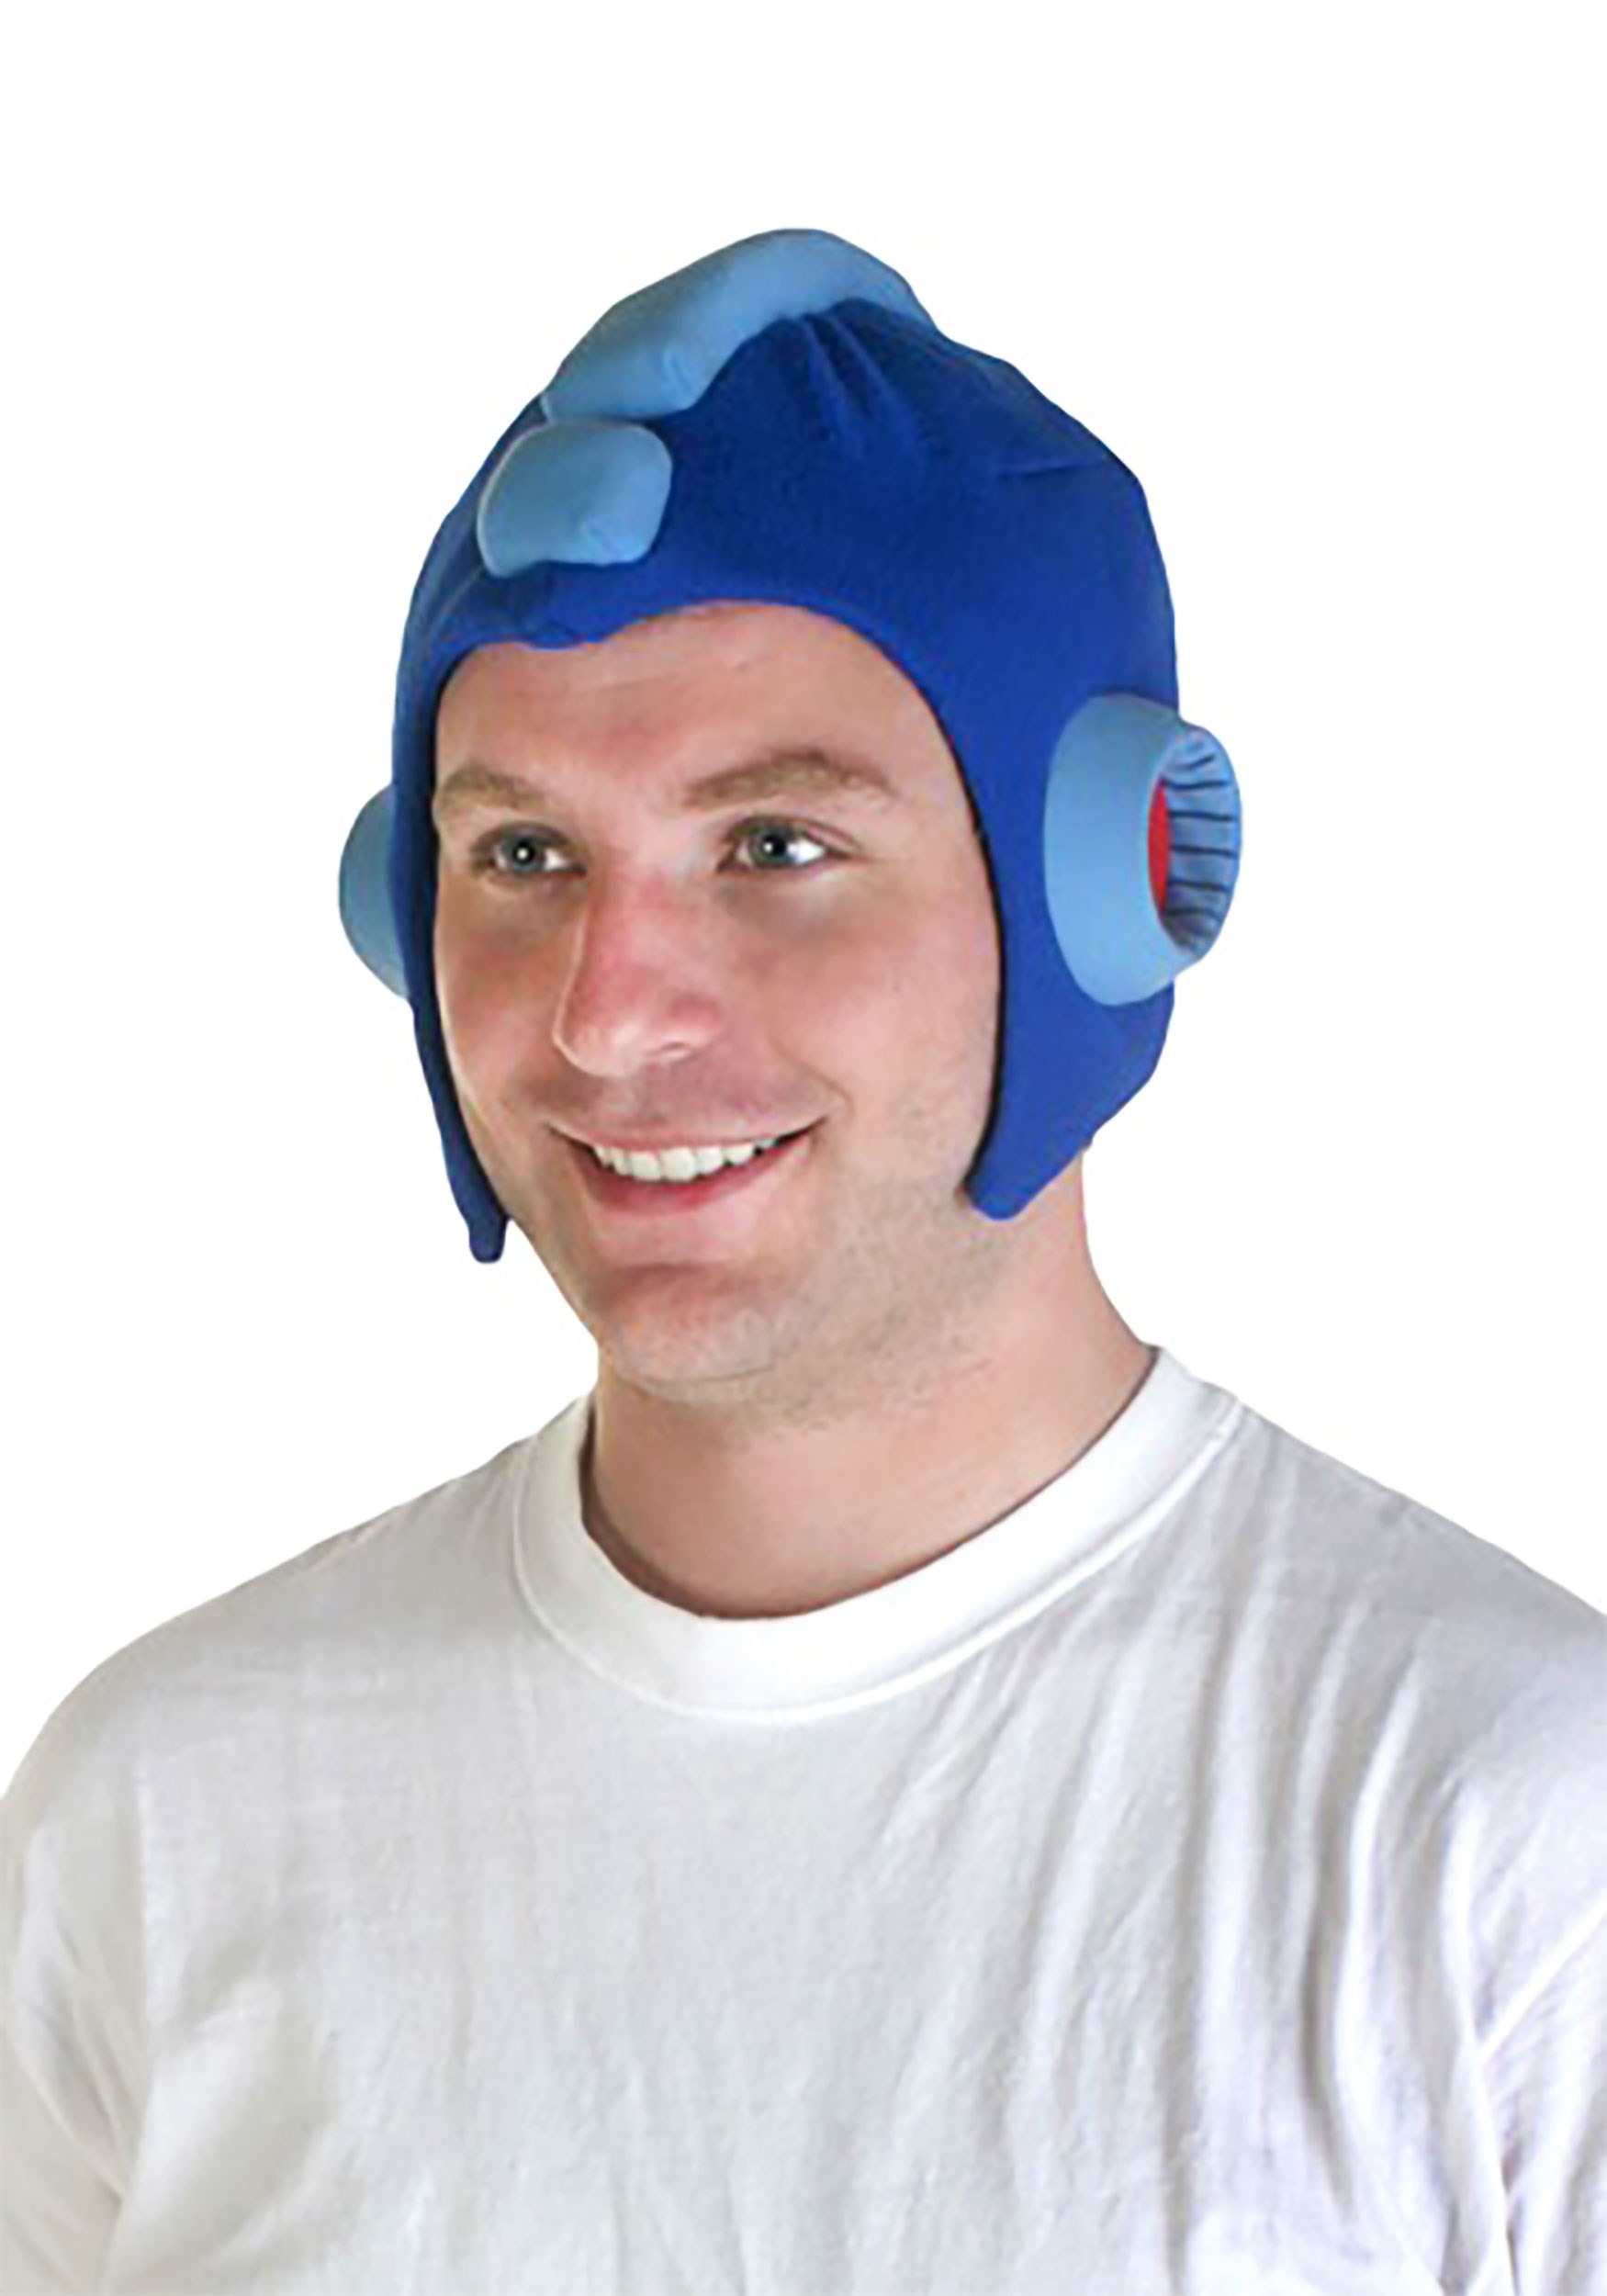 Costume Helmet from the Mega Man Video Game